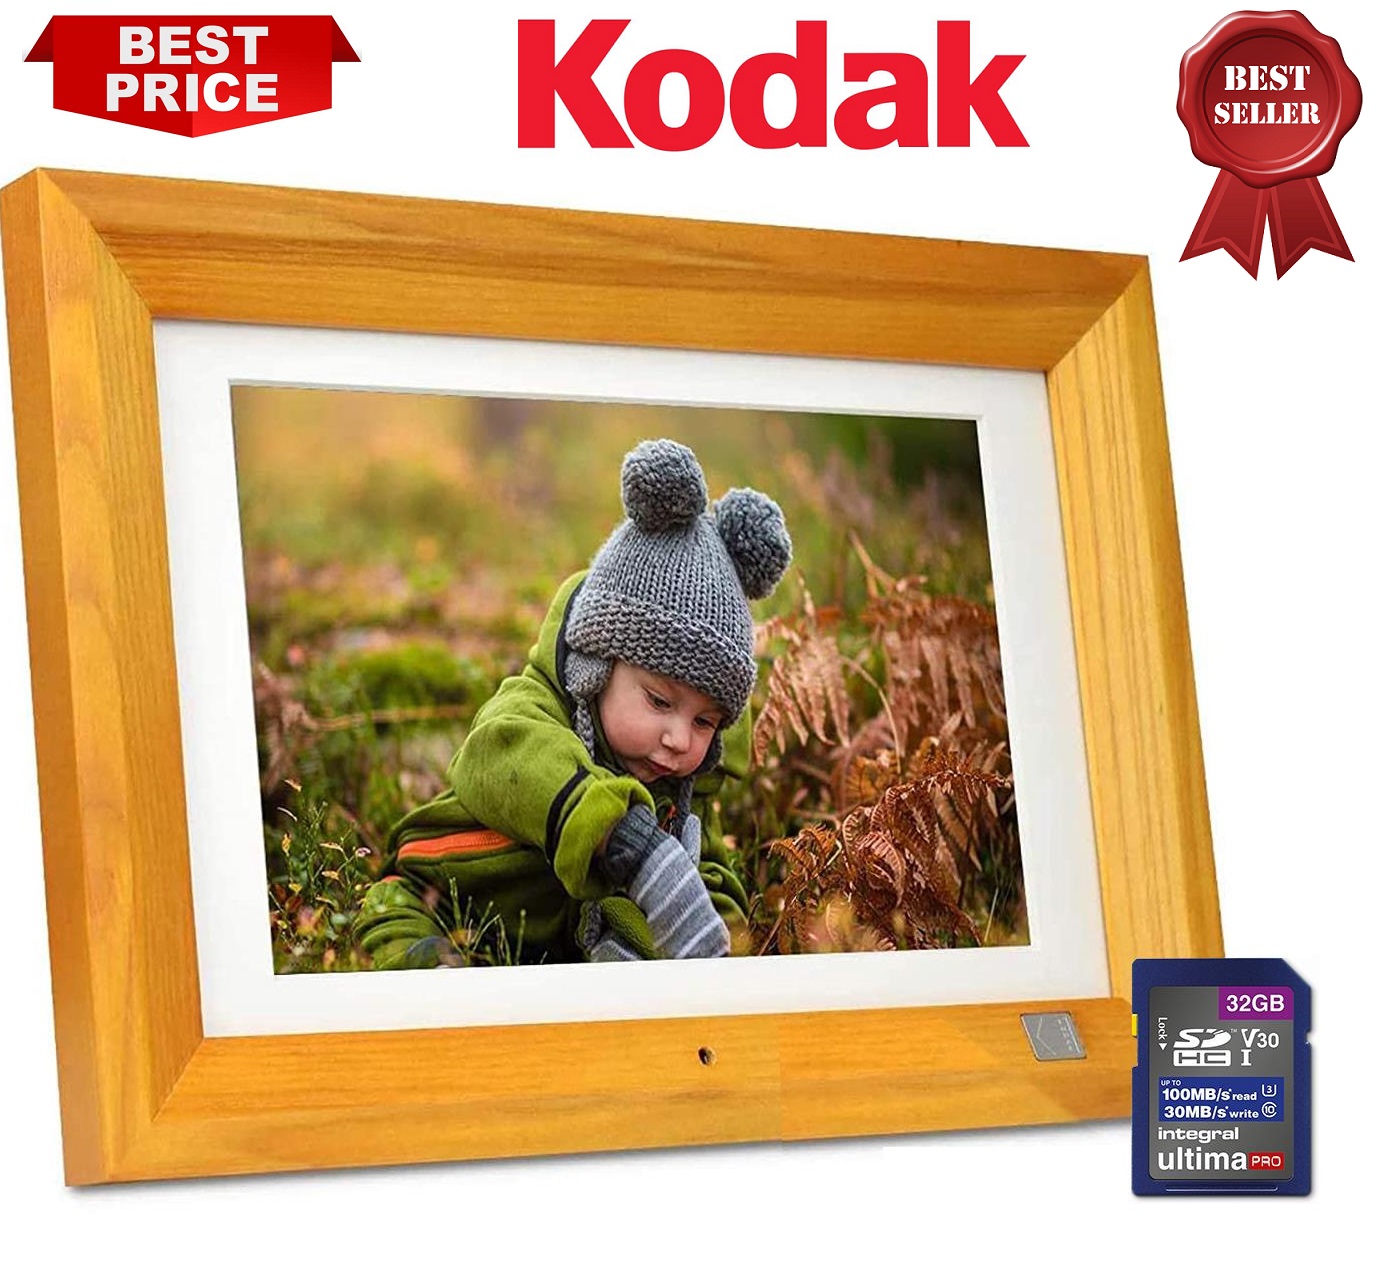 KODAK High Resolution 1280x800 10 Inch Burlywood Digital Photo Frame